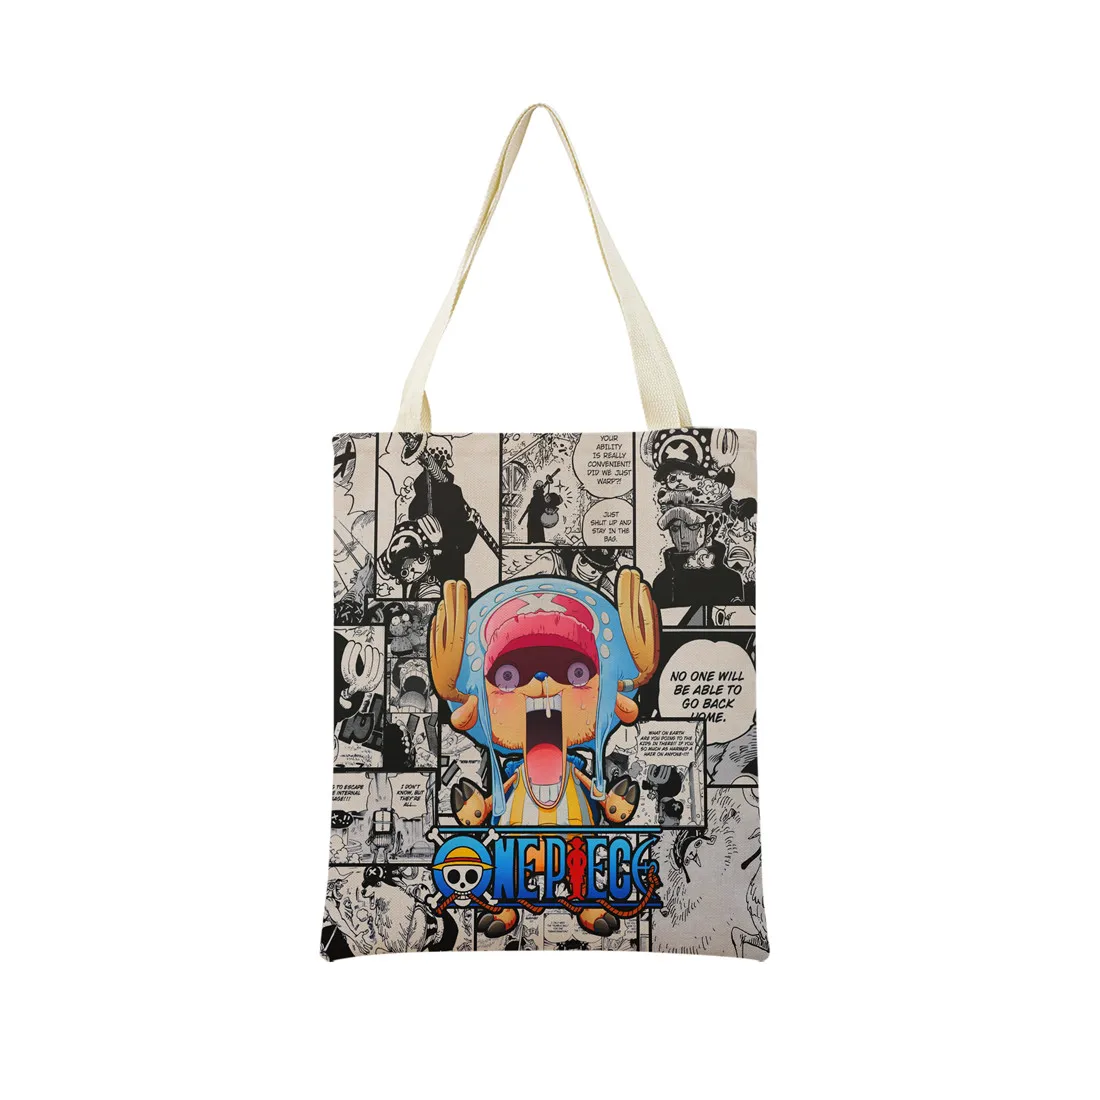 Chopper One Piece Art Print Tote Bag - One Piece Store